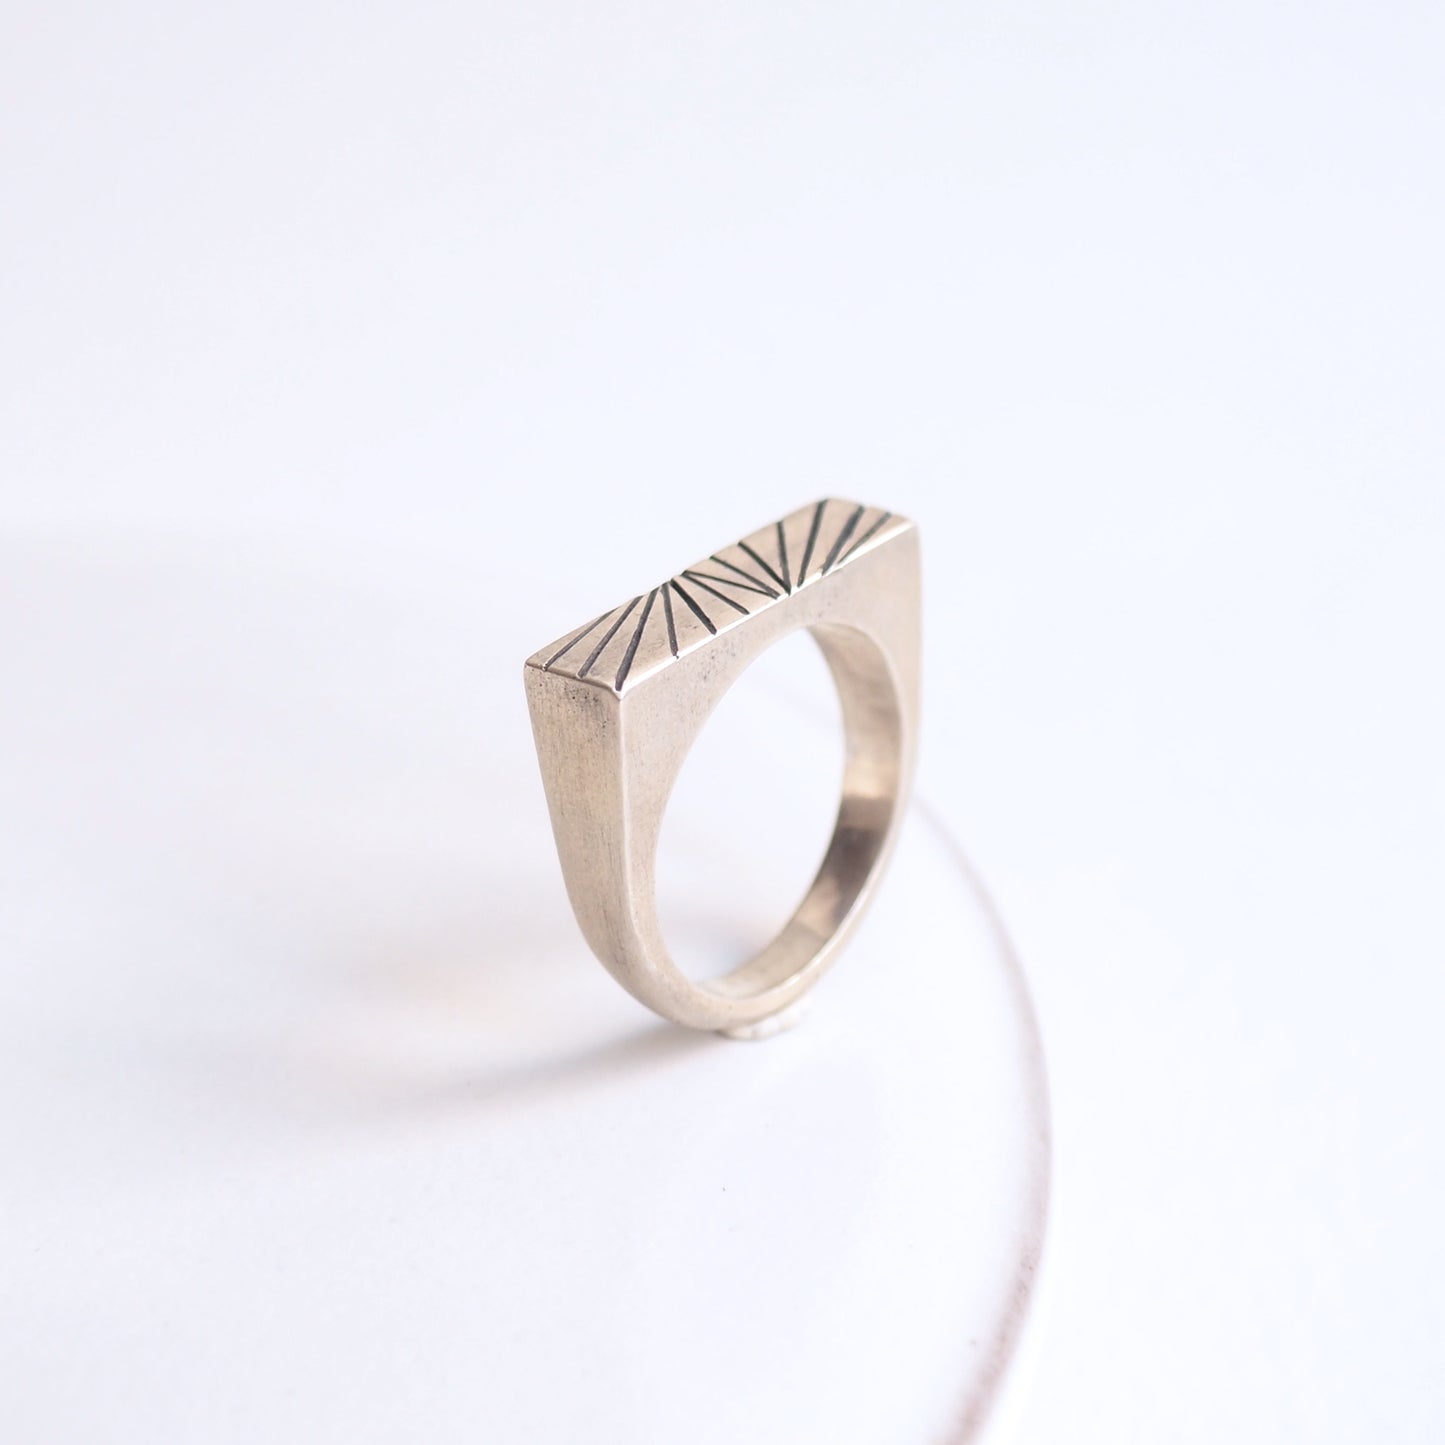 Ring Silver Man jewelry design bespoke unique sunset fashion custom